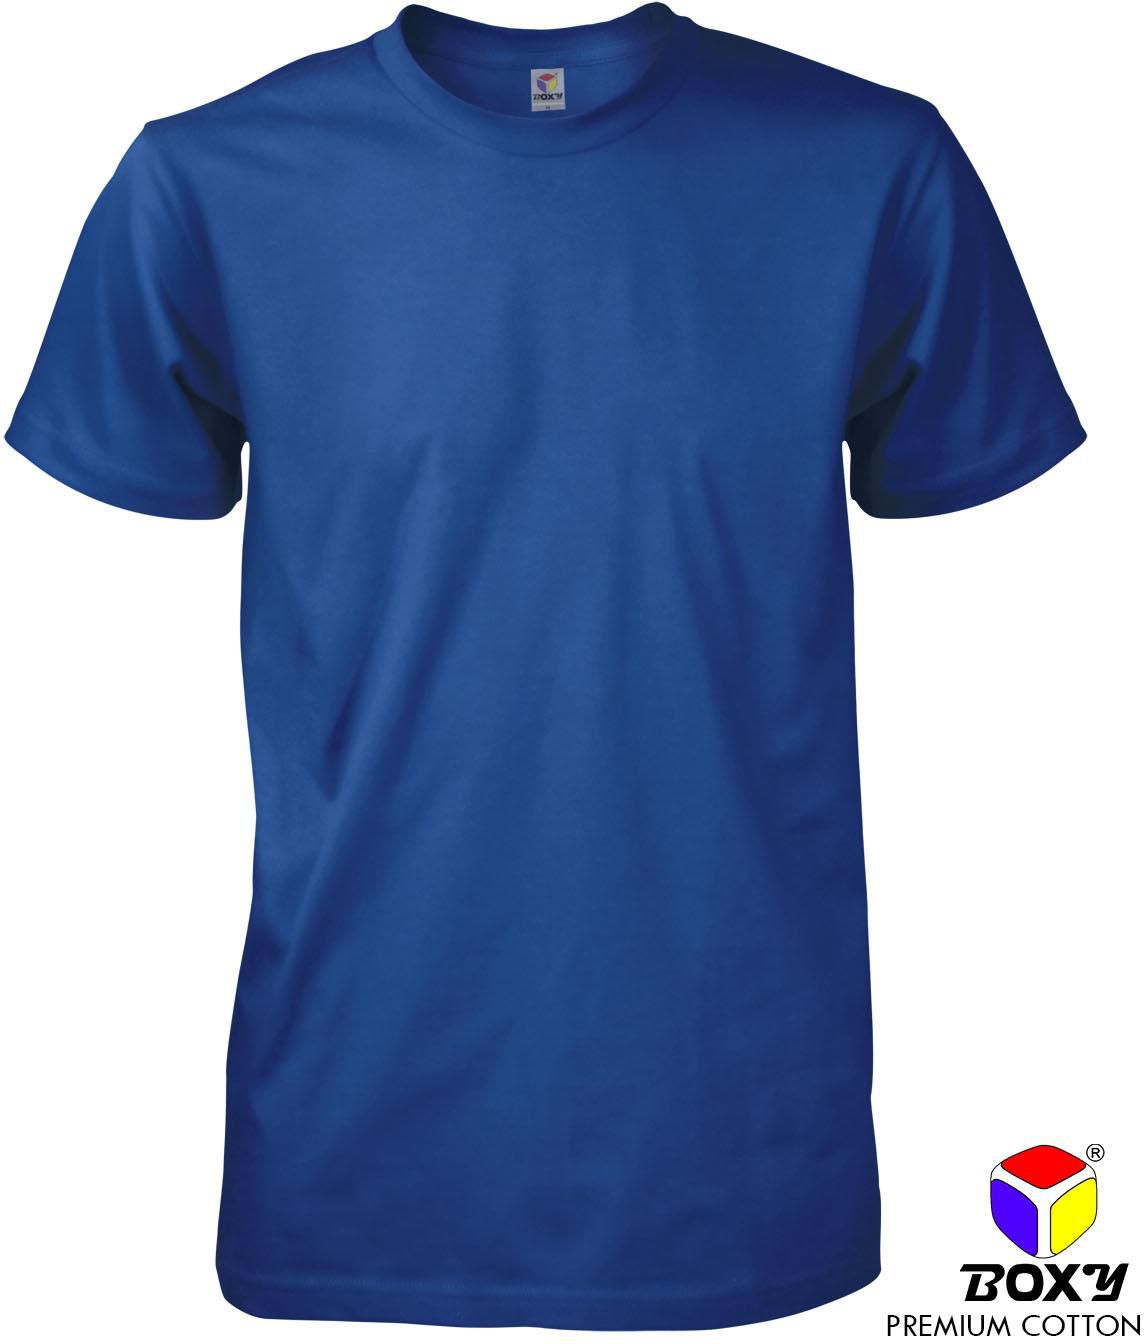 Boxy Premium Cotton Round Neck T-shirt - 7 Sizes (Royal Blue)